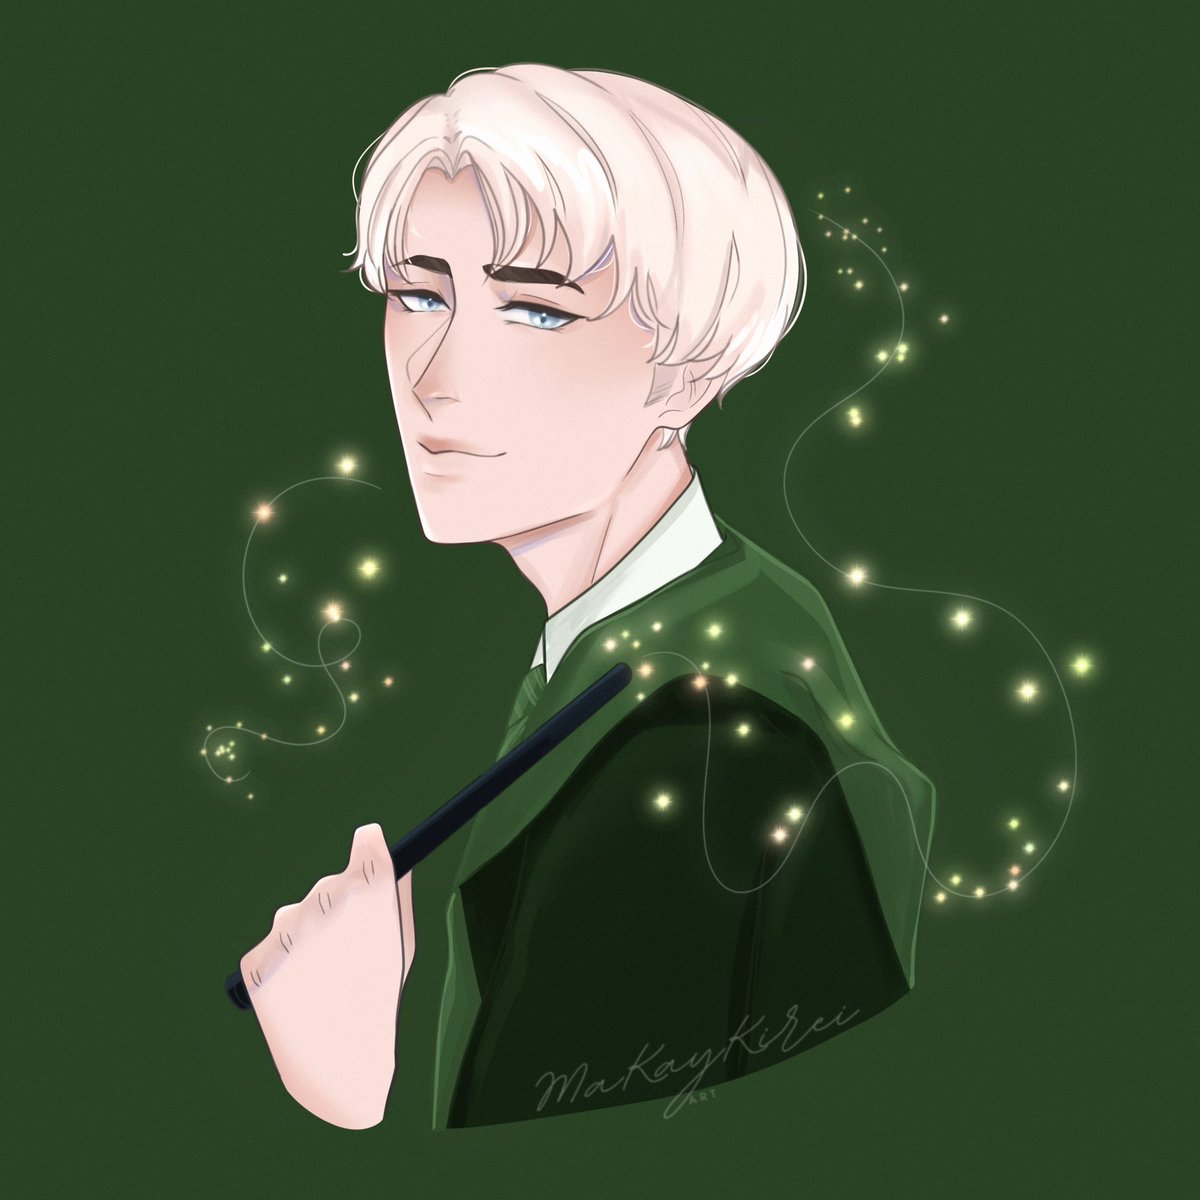 •✨•
The best boy, Draco Malfoy 🖤
•
•
•
#NewProfiePic #DracoMalfoy #draco #hpfanart #dracomalfoyfanart